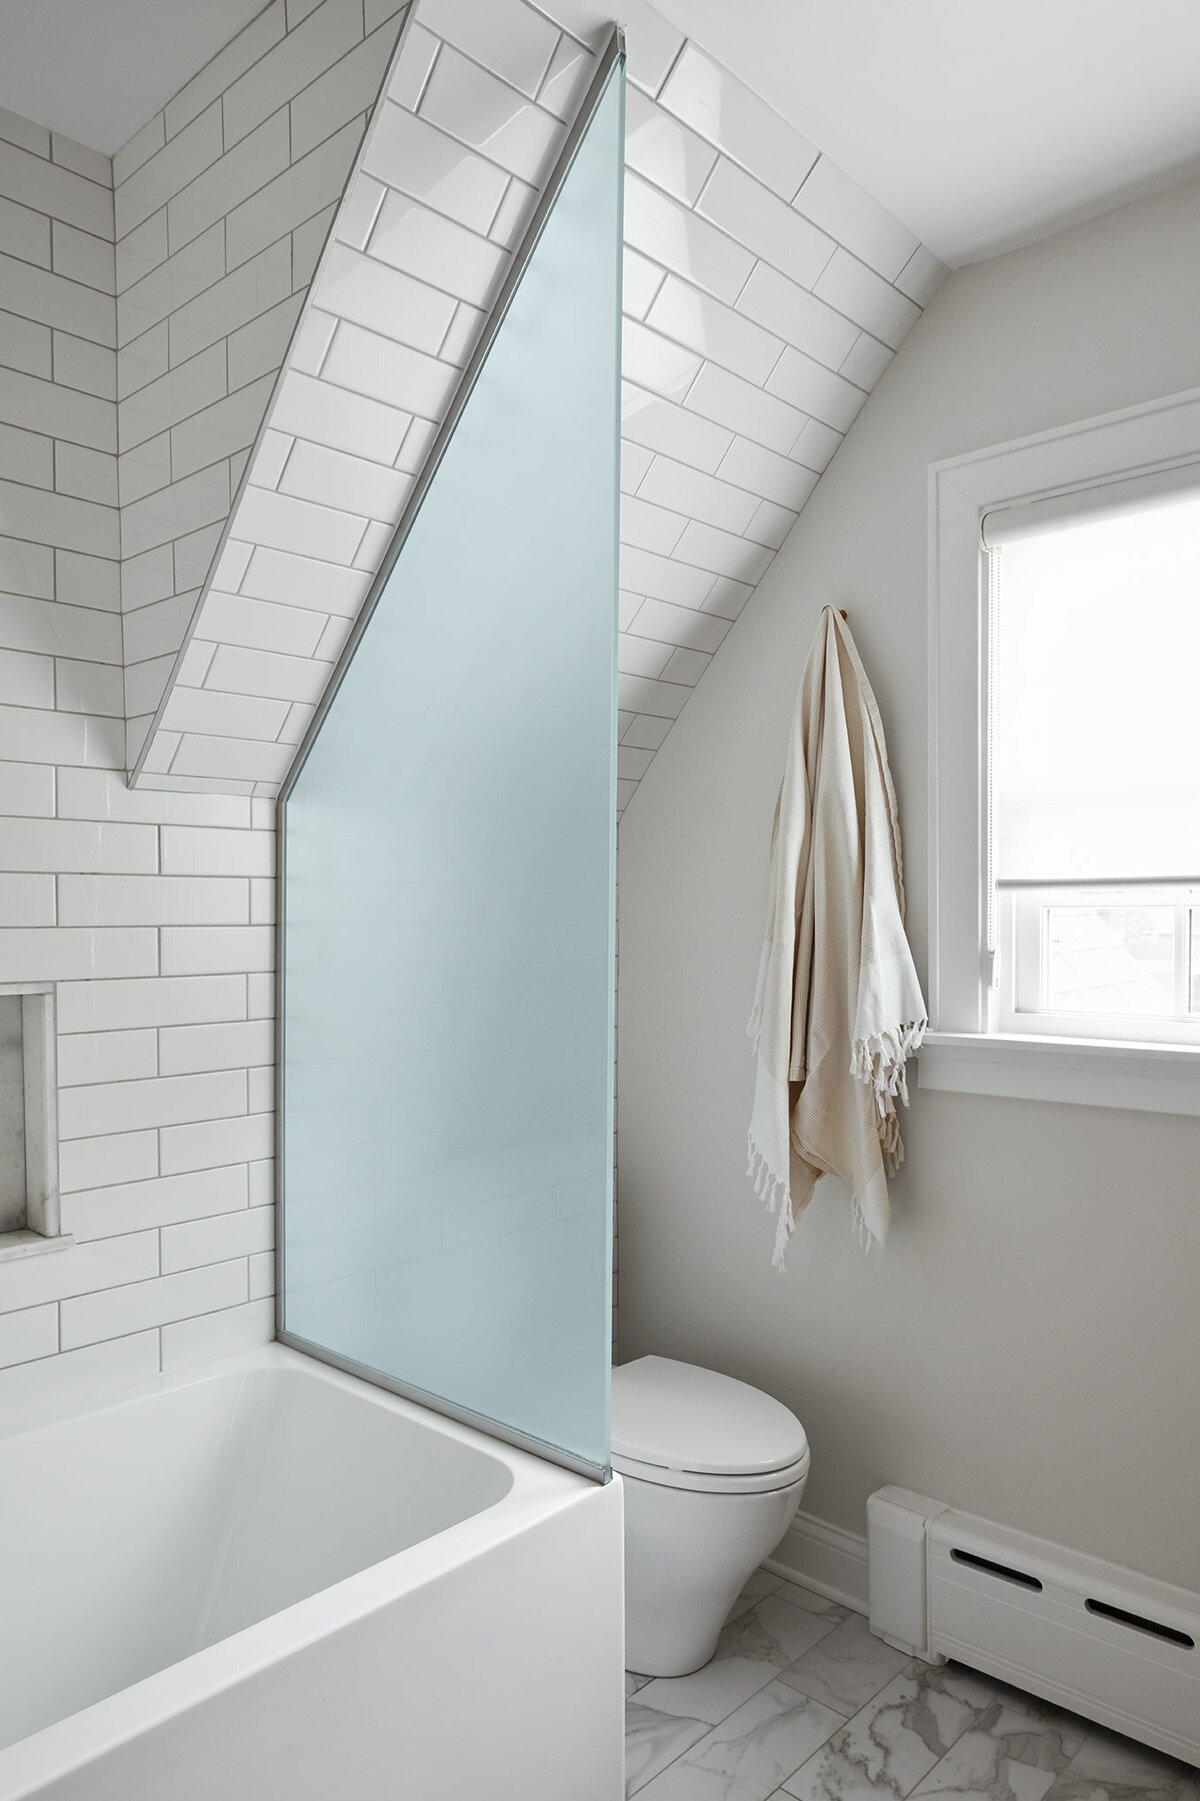 Bathroom with white tiles